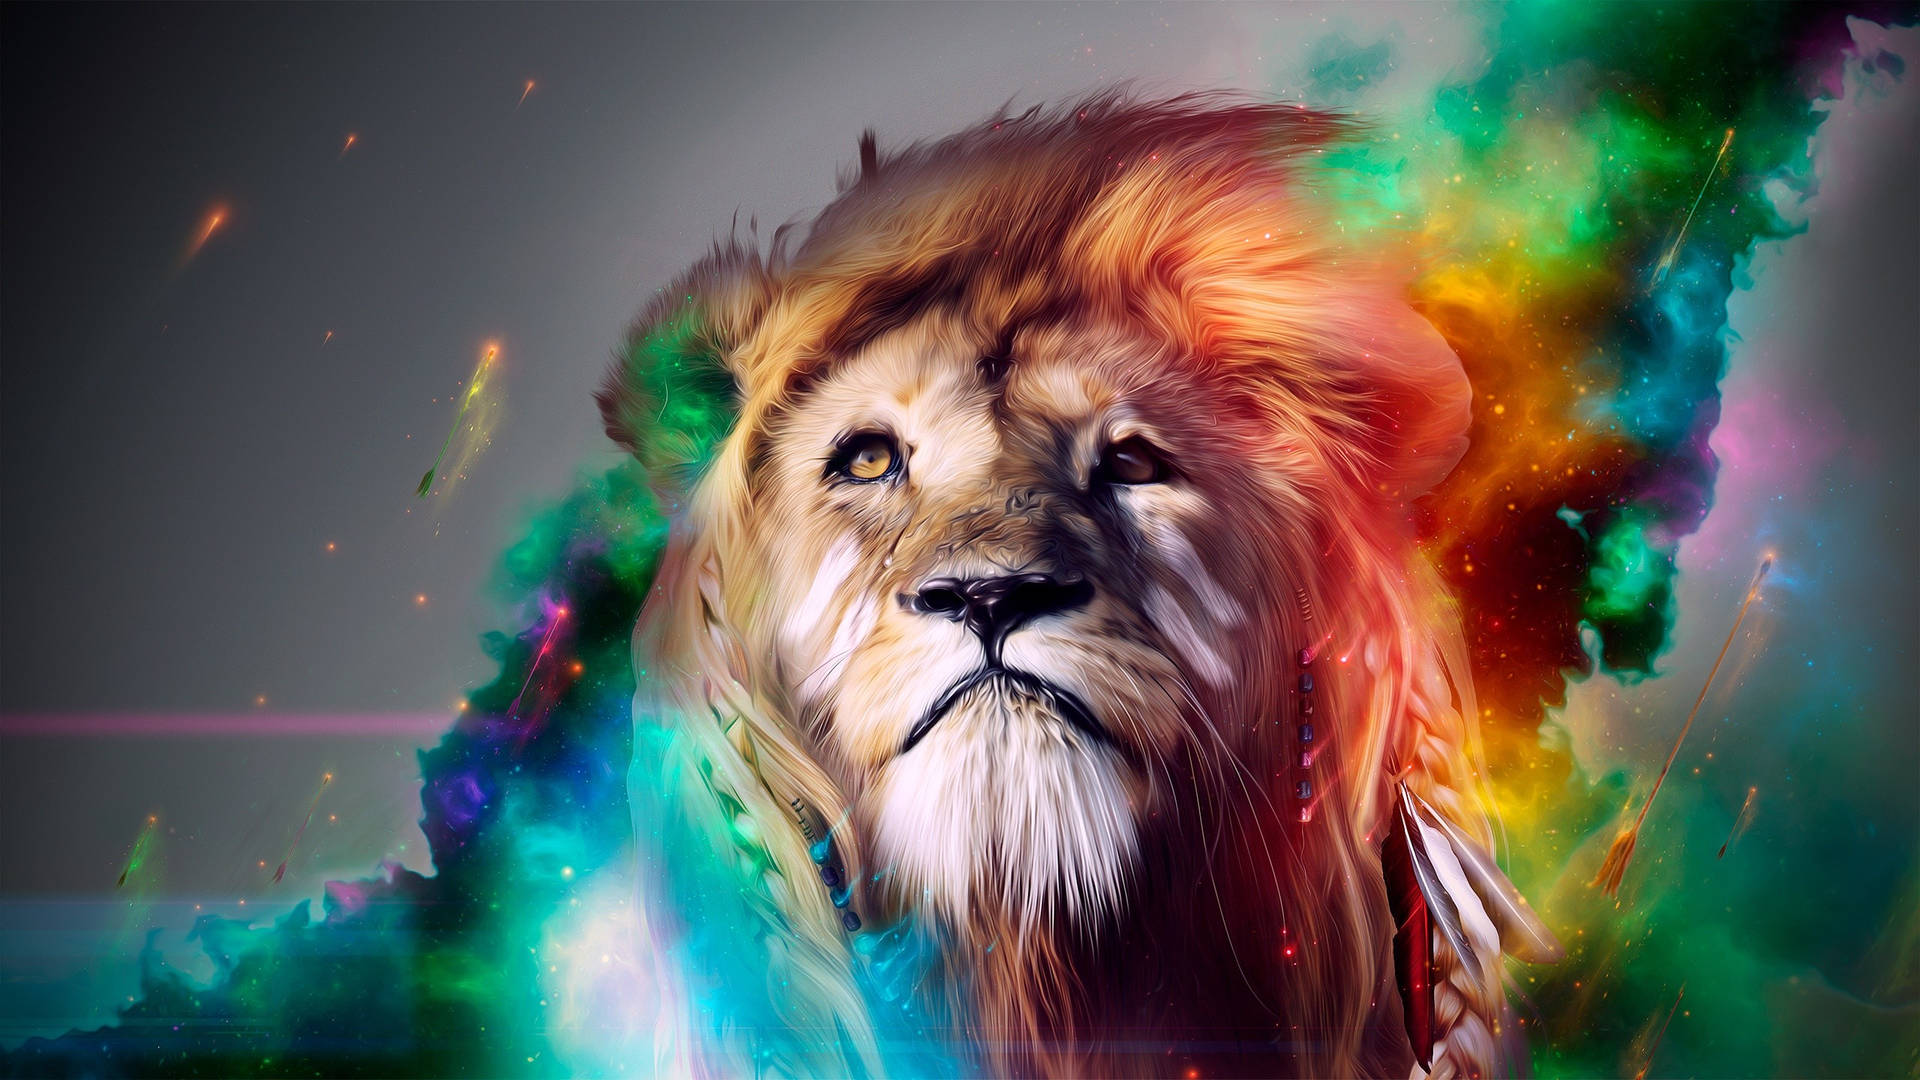 Lion Head With Colorful Smoke